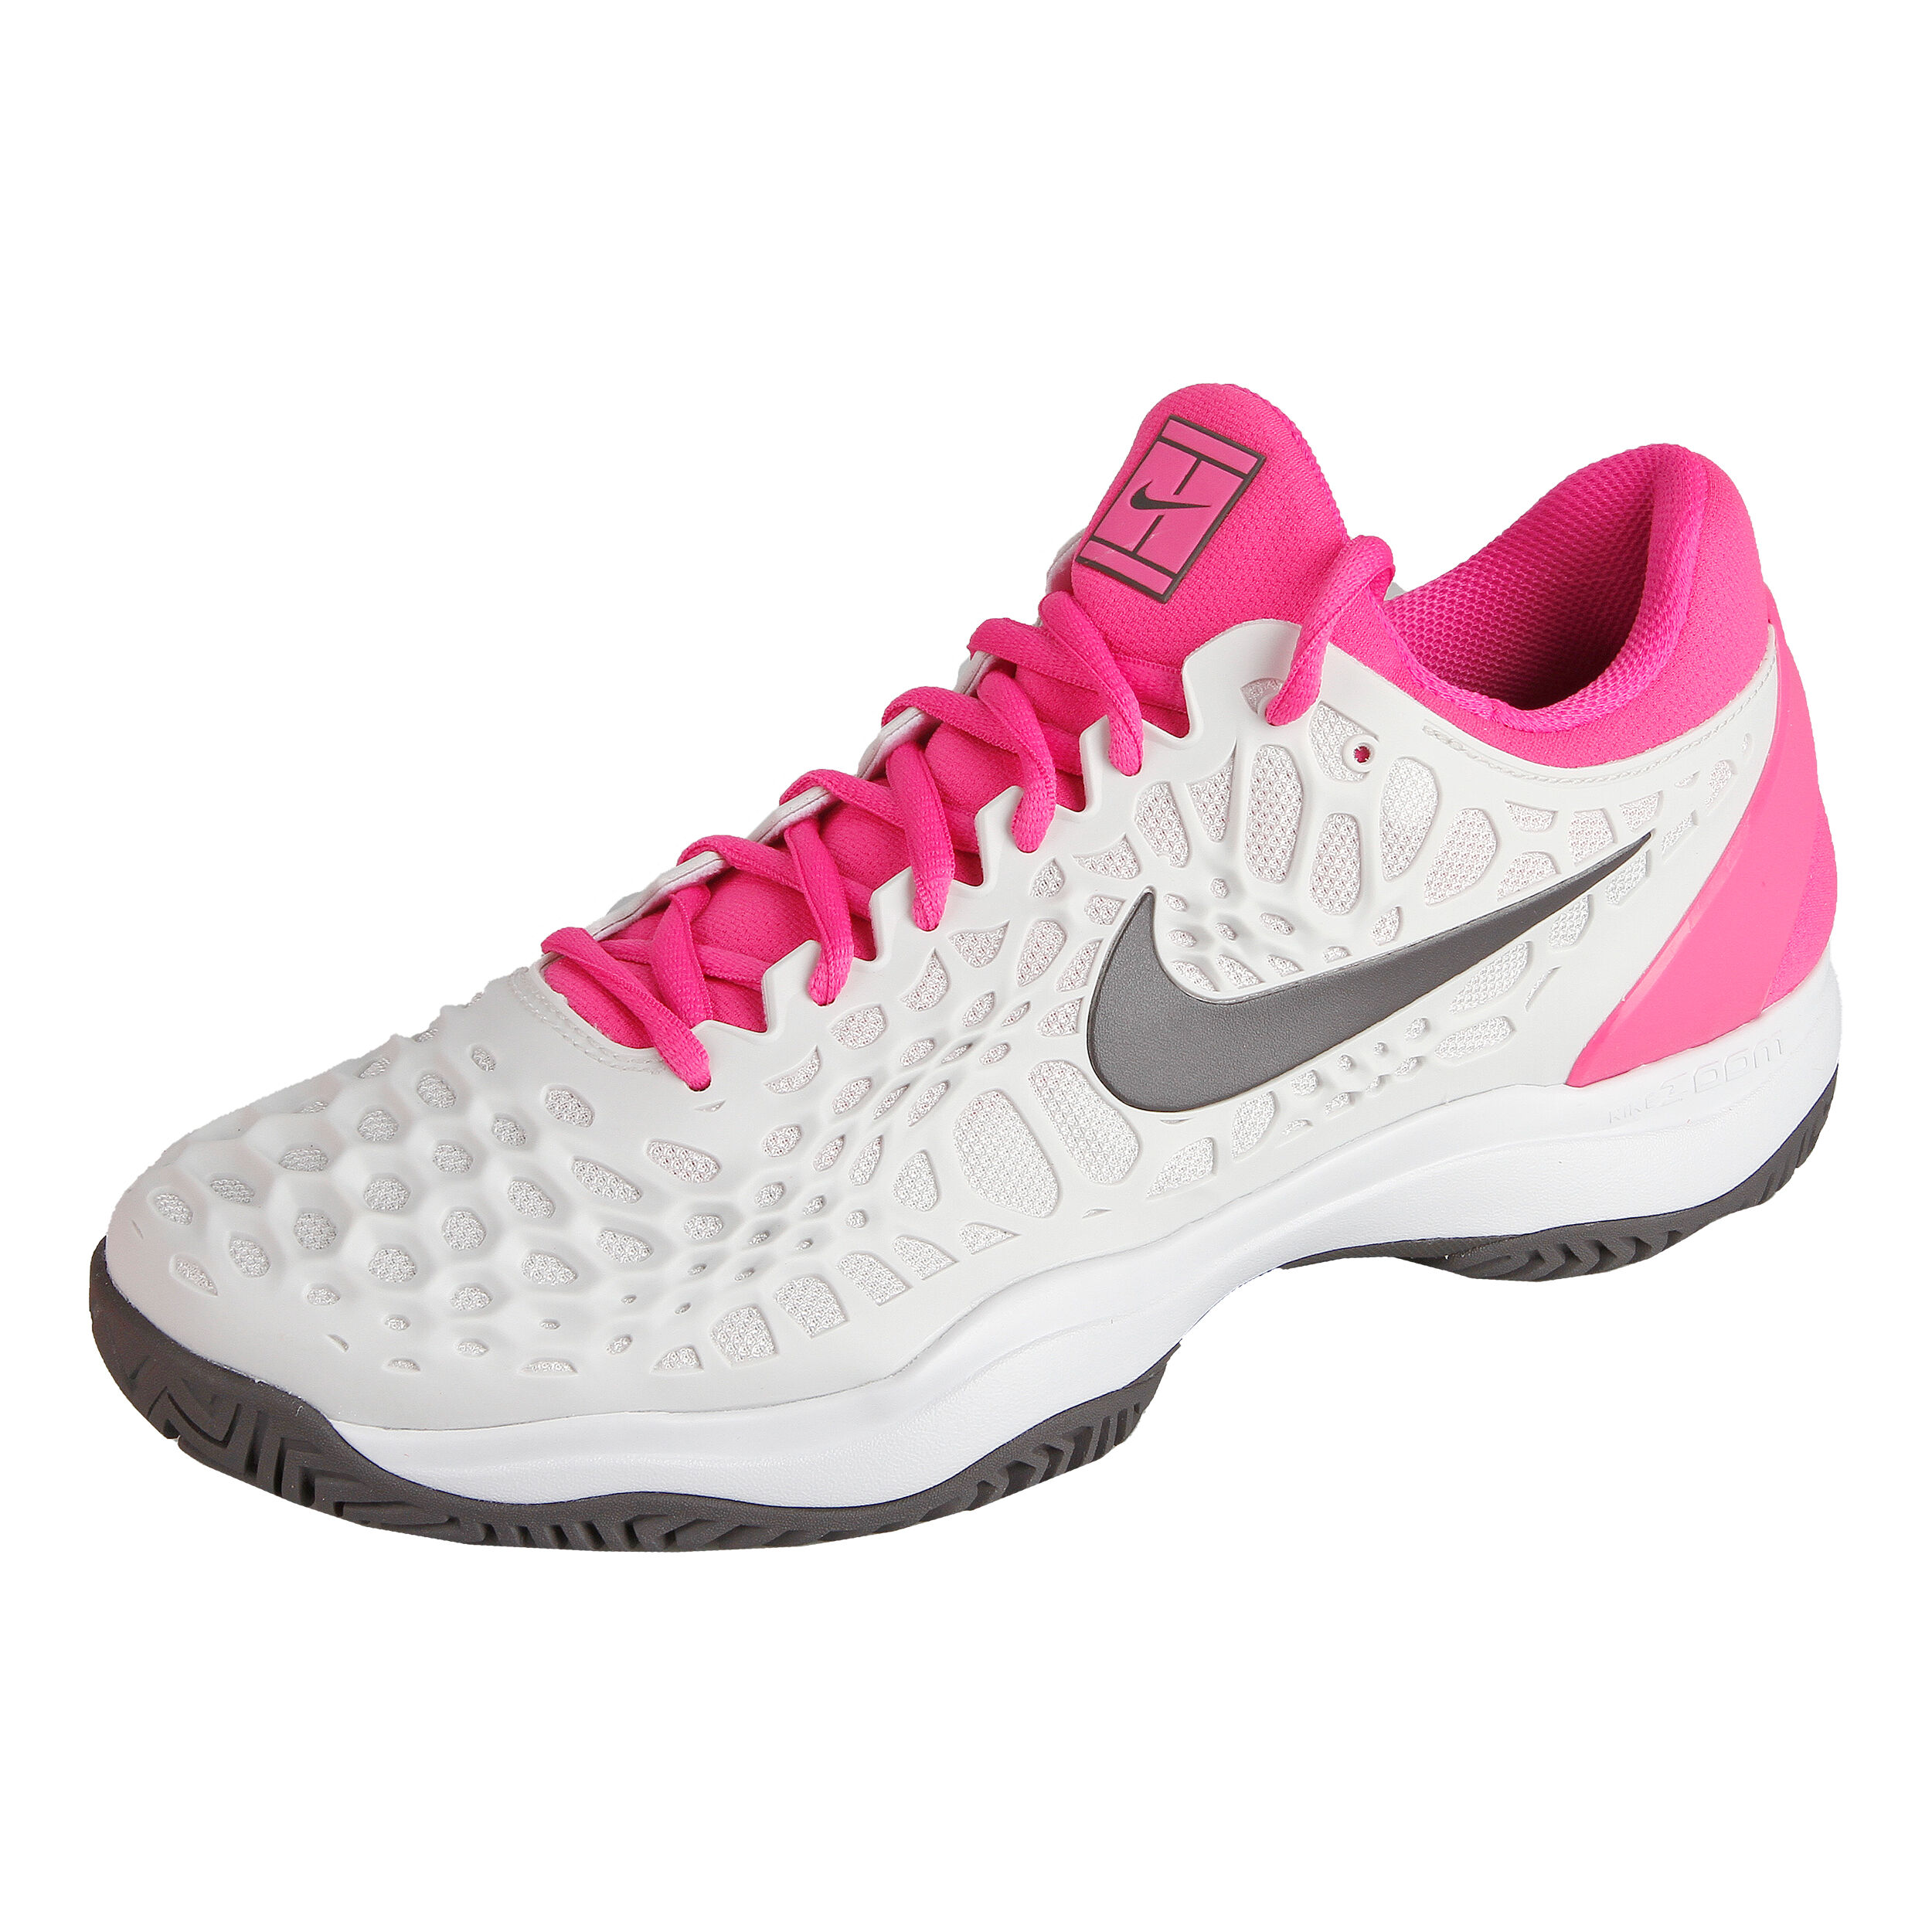 Buy Nike Zoom Cage 3 All Court Shoe Men Cream, Pink online